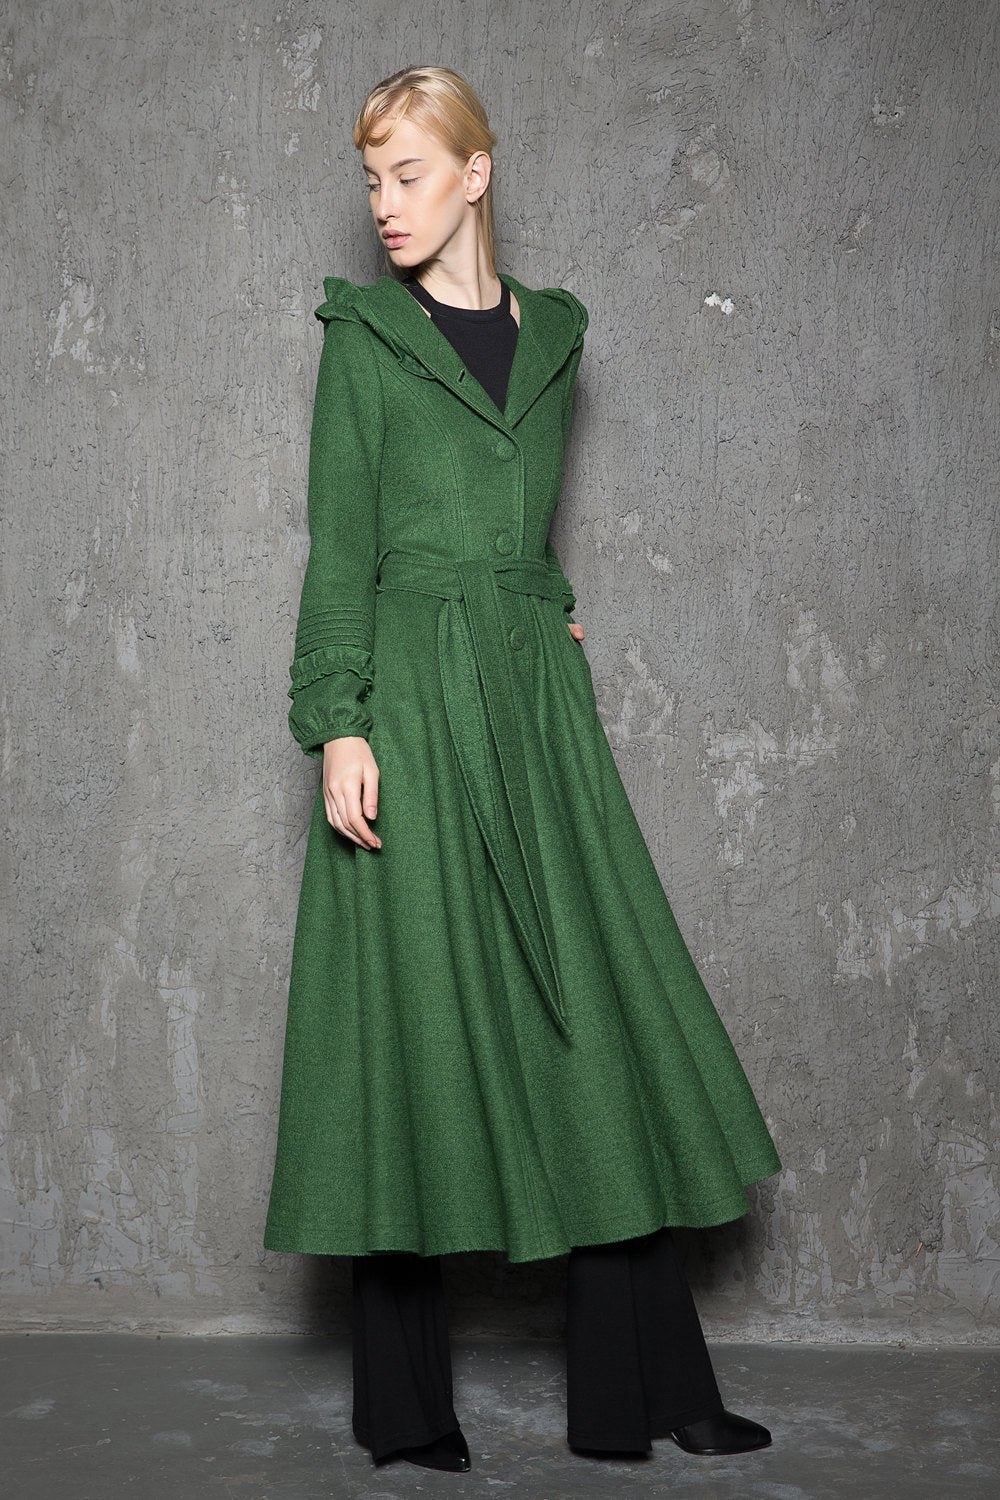 Maxi coat, wool coat, Green wool coat, emerald green coat, fit and fla –  Ylistyle